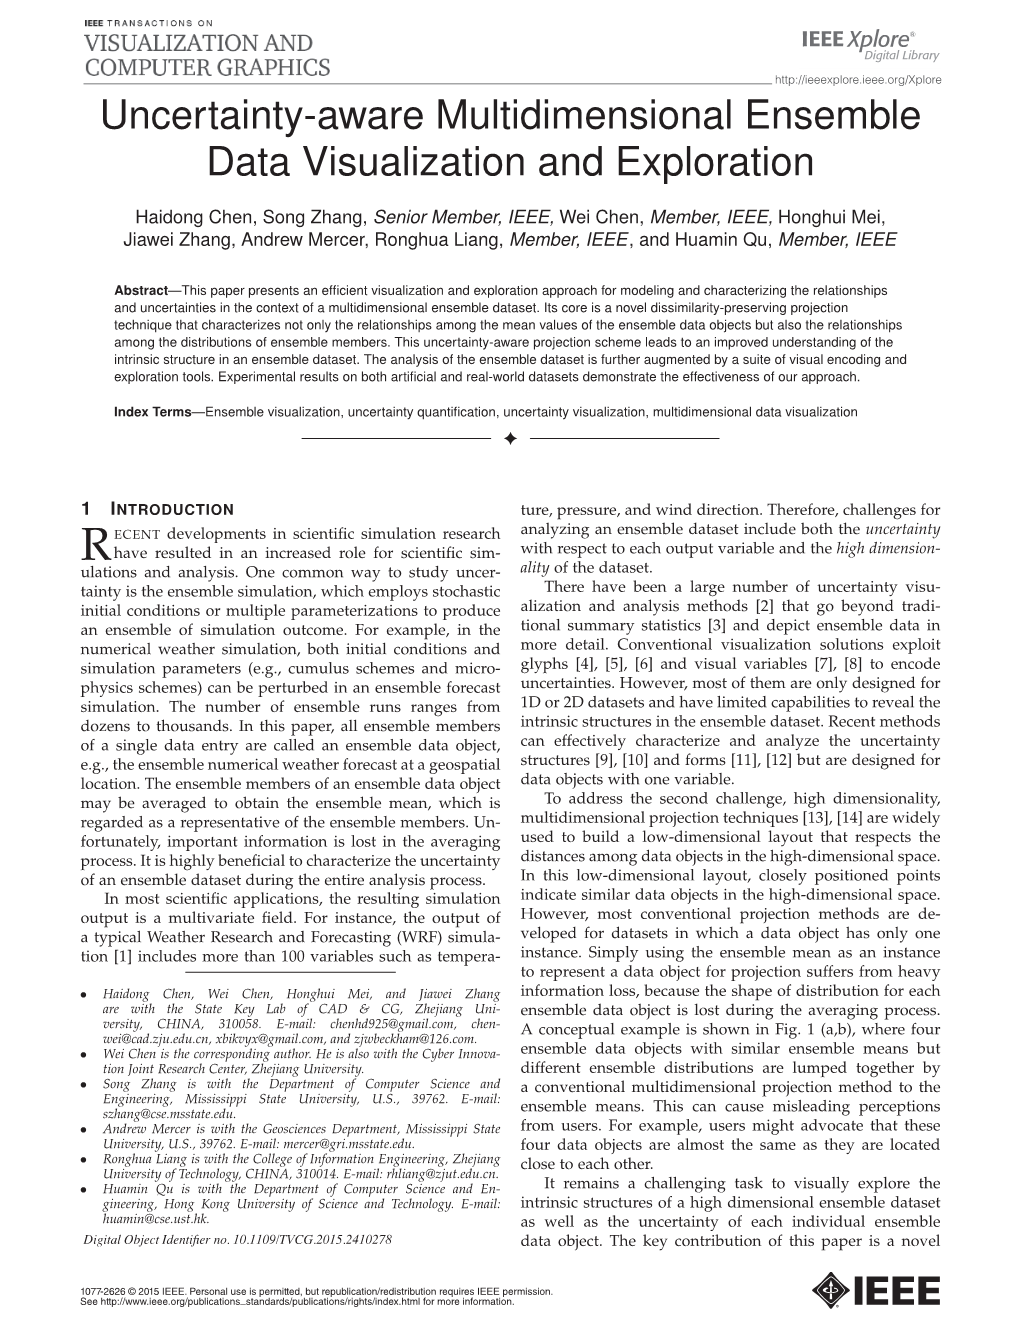 Uncertainty-Aware Multidimensional Ensemble Data Visualization and Exploration